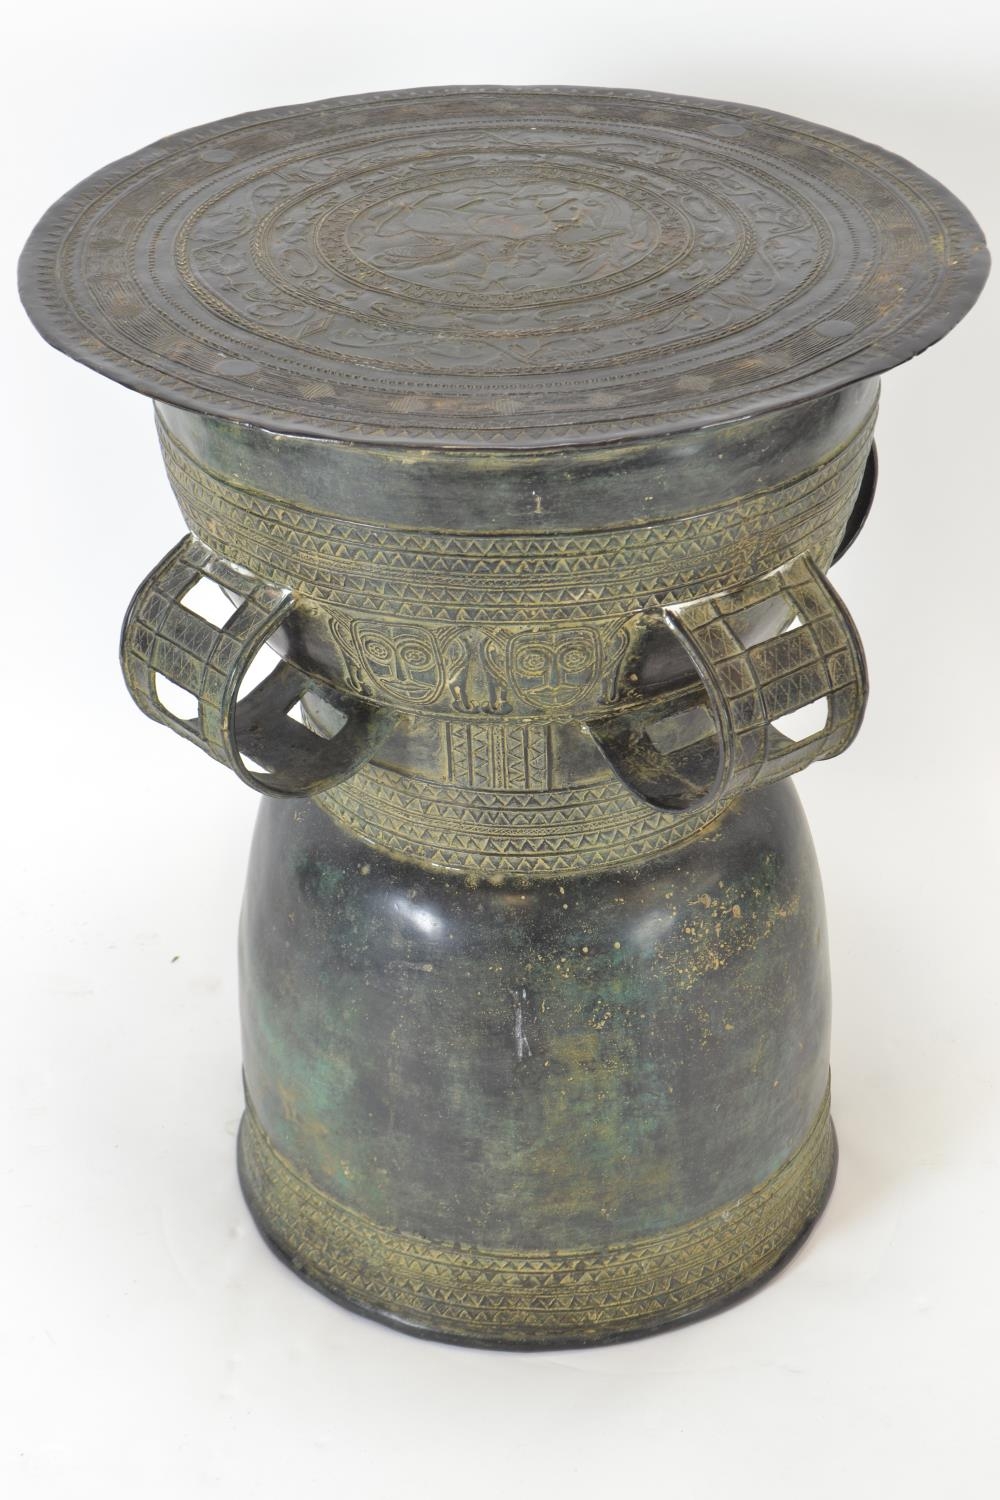 Verdigris bronze Balinese Moko rain drum, dia. 52cm height 63cm  - Image 3 of 7